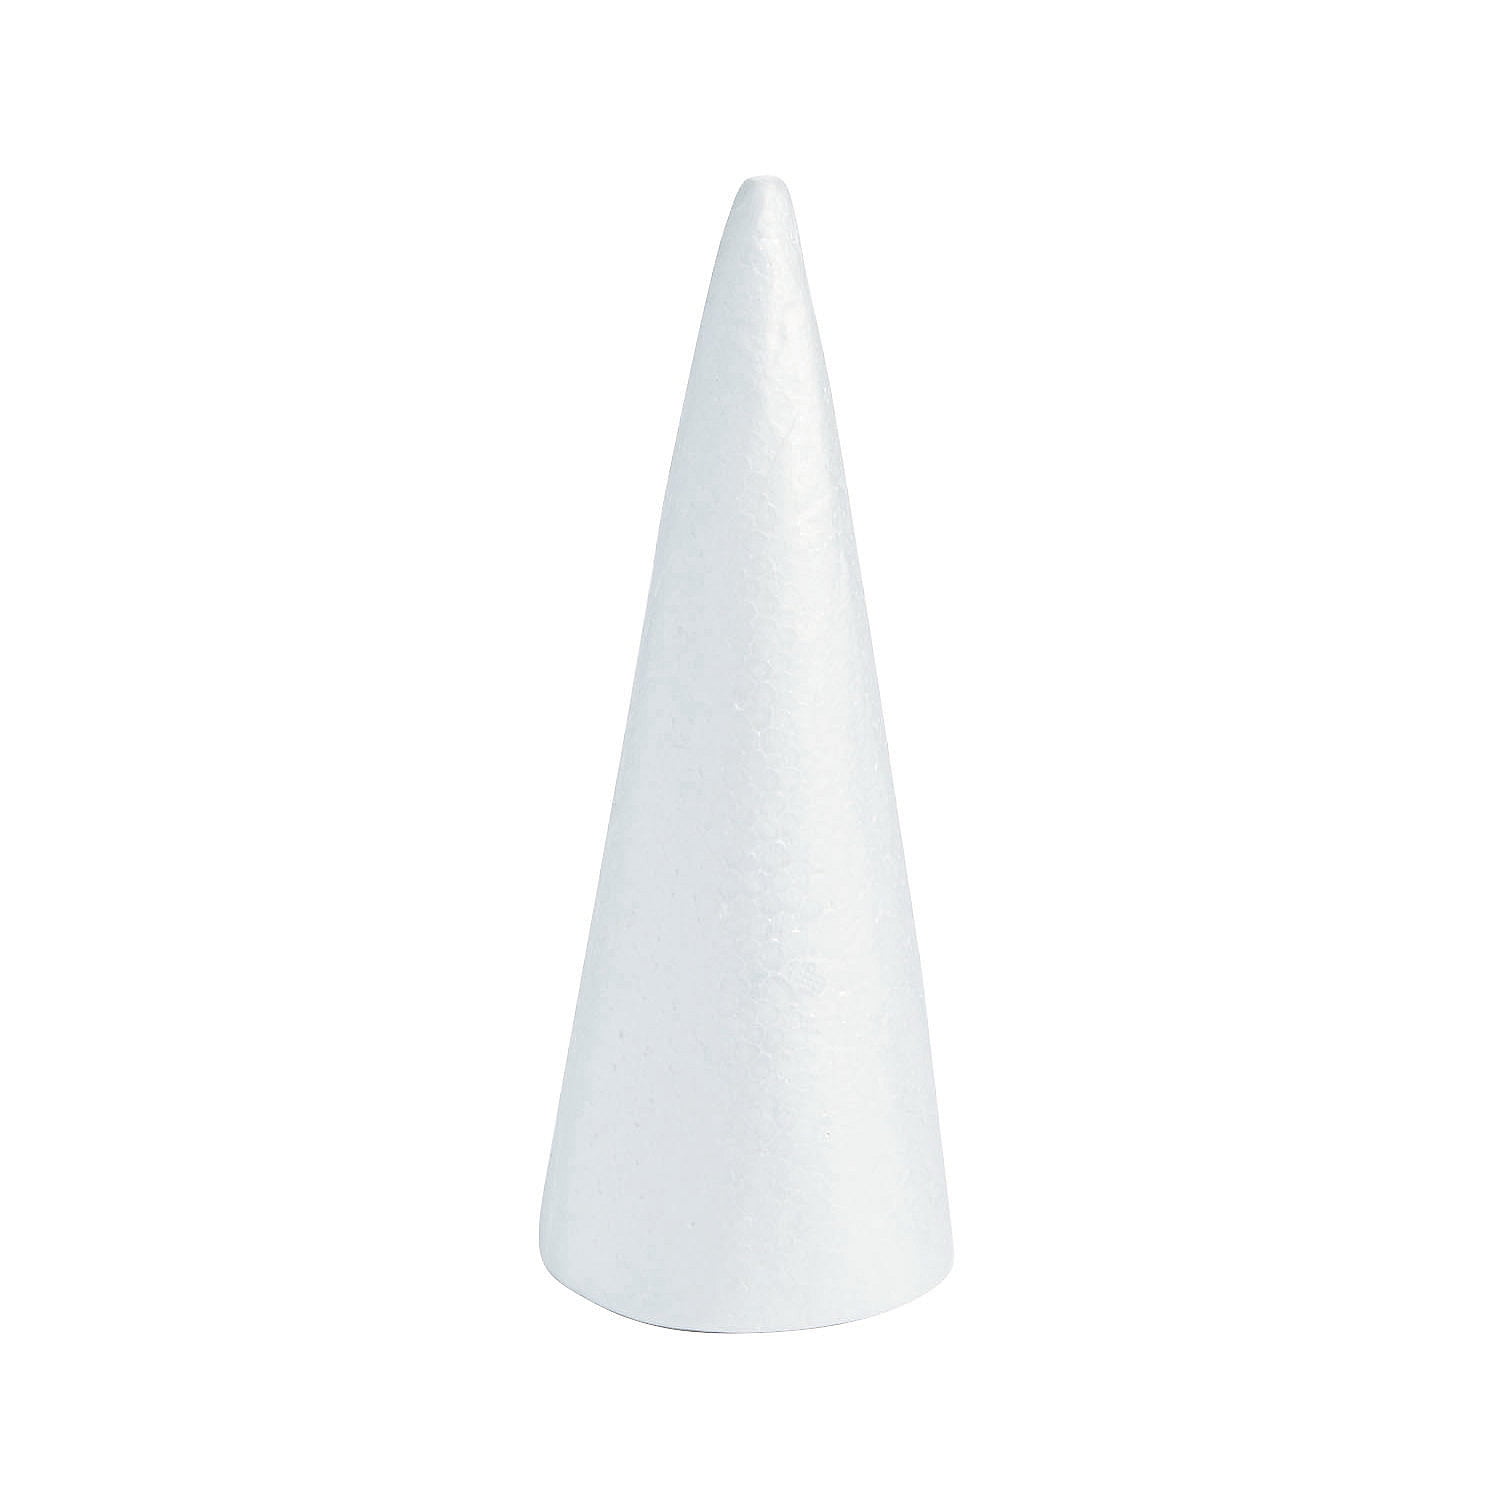  6-Pack Craft Foam Cones(3.7X11.7in), White Polystyrene